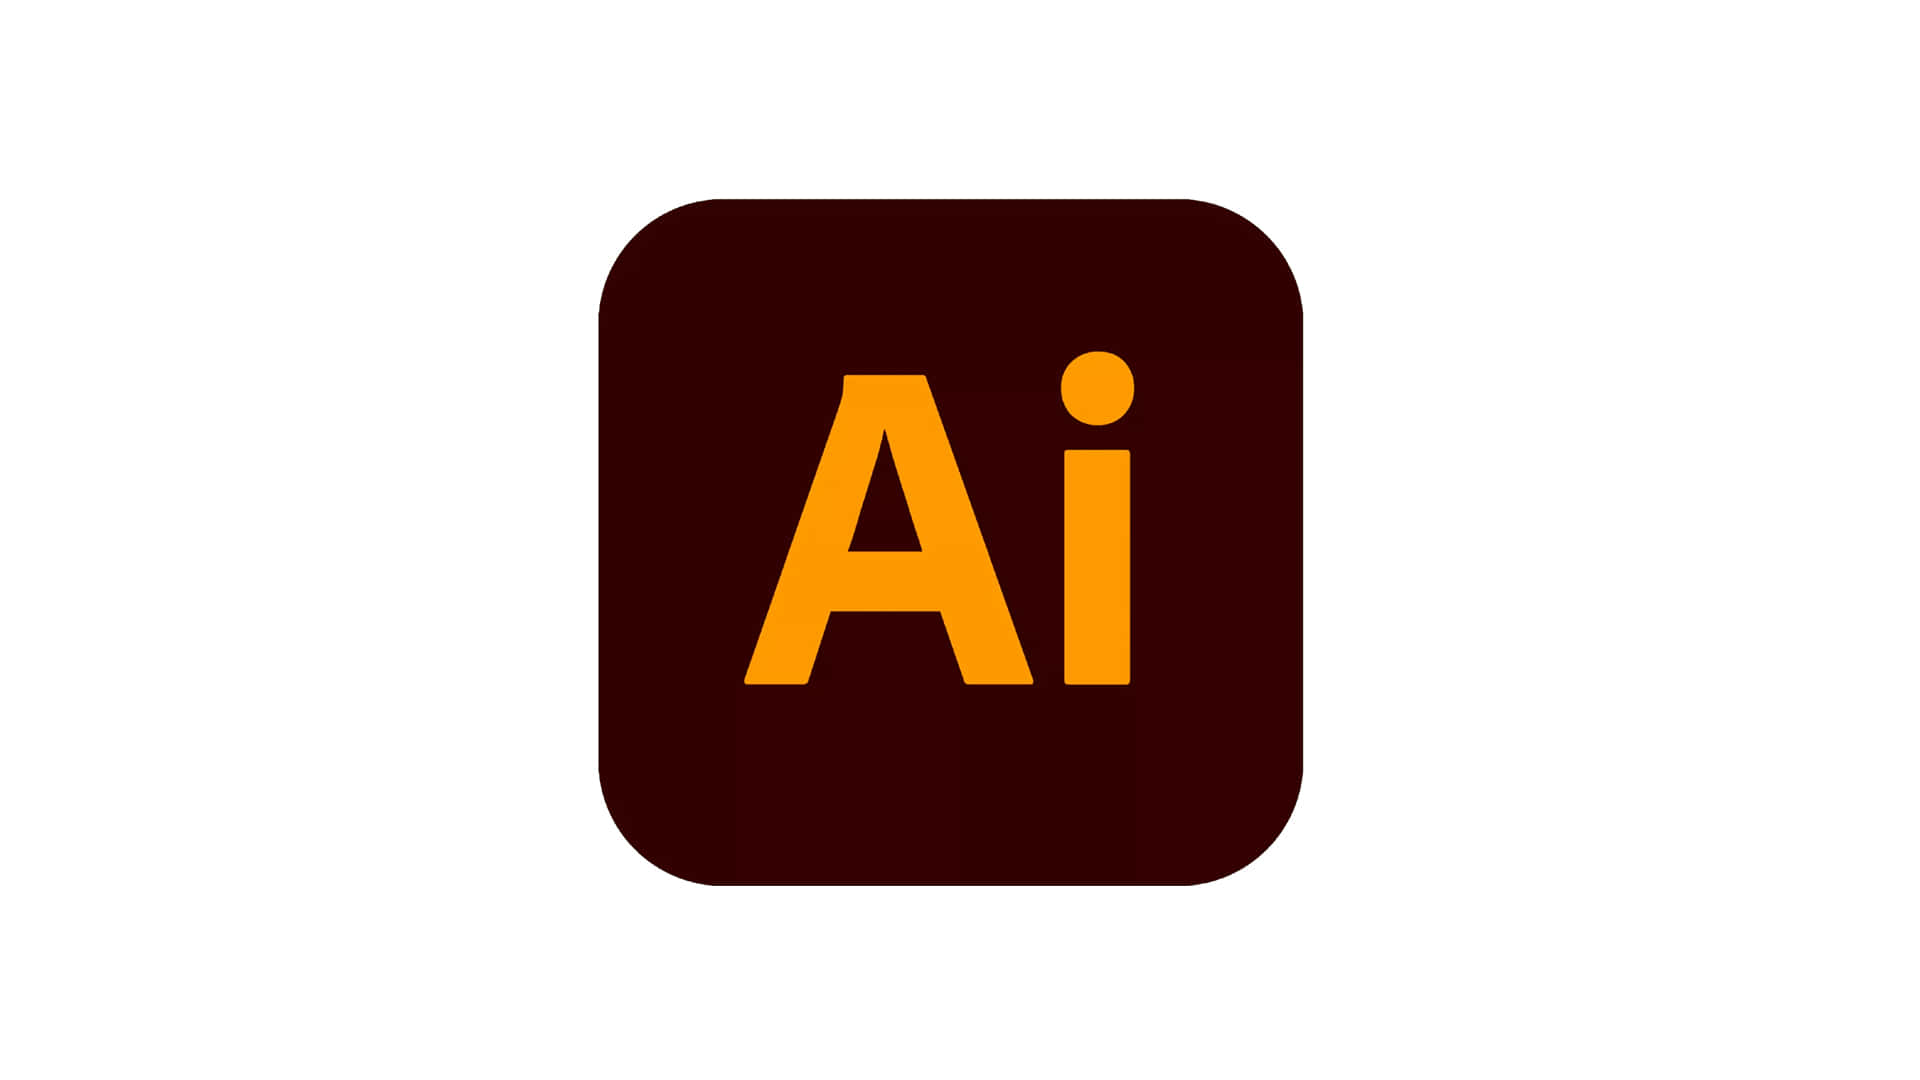 Adobe Ai Logo On A Black Background